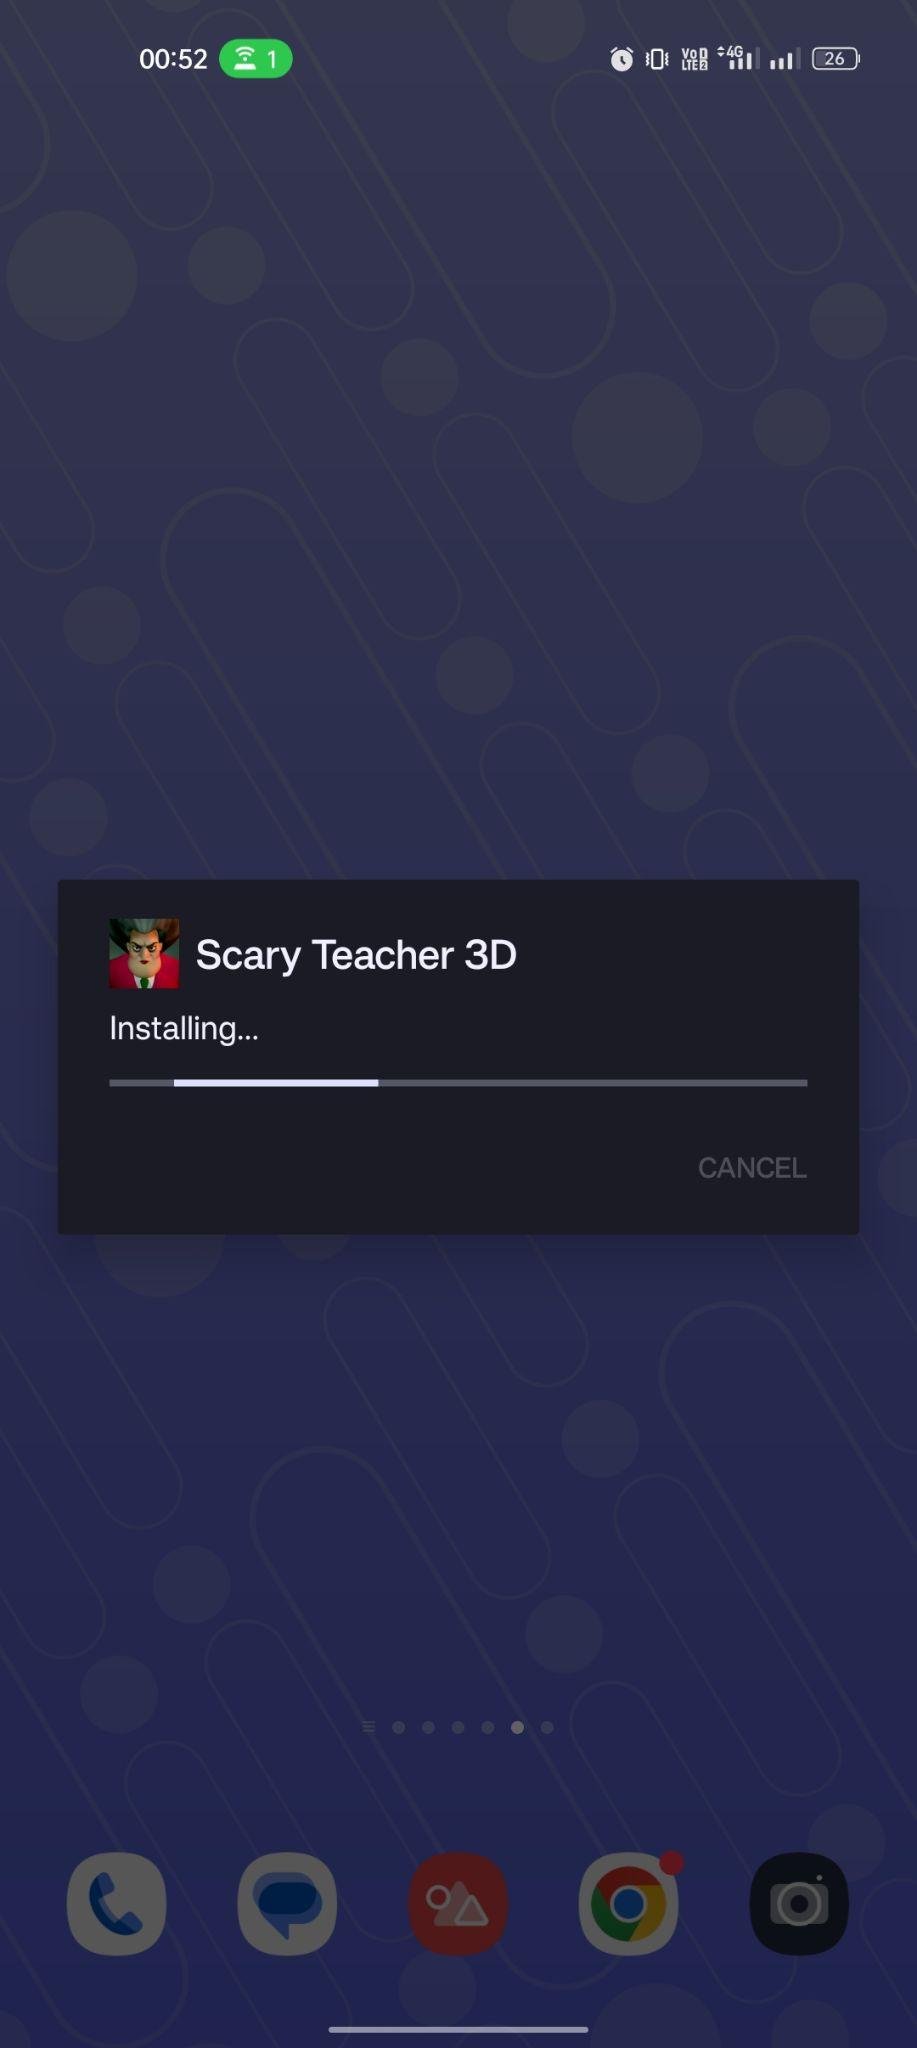 Scary Teacher 3D apk installing